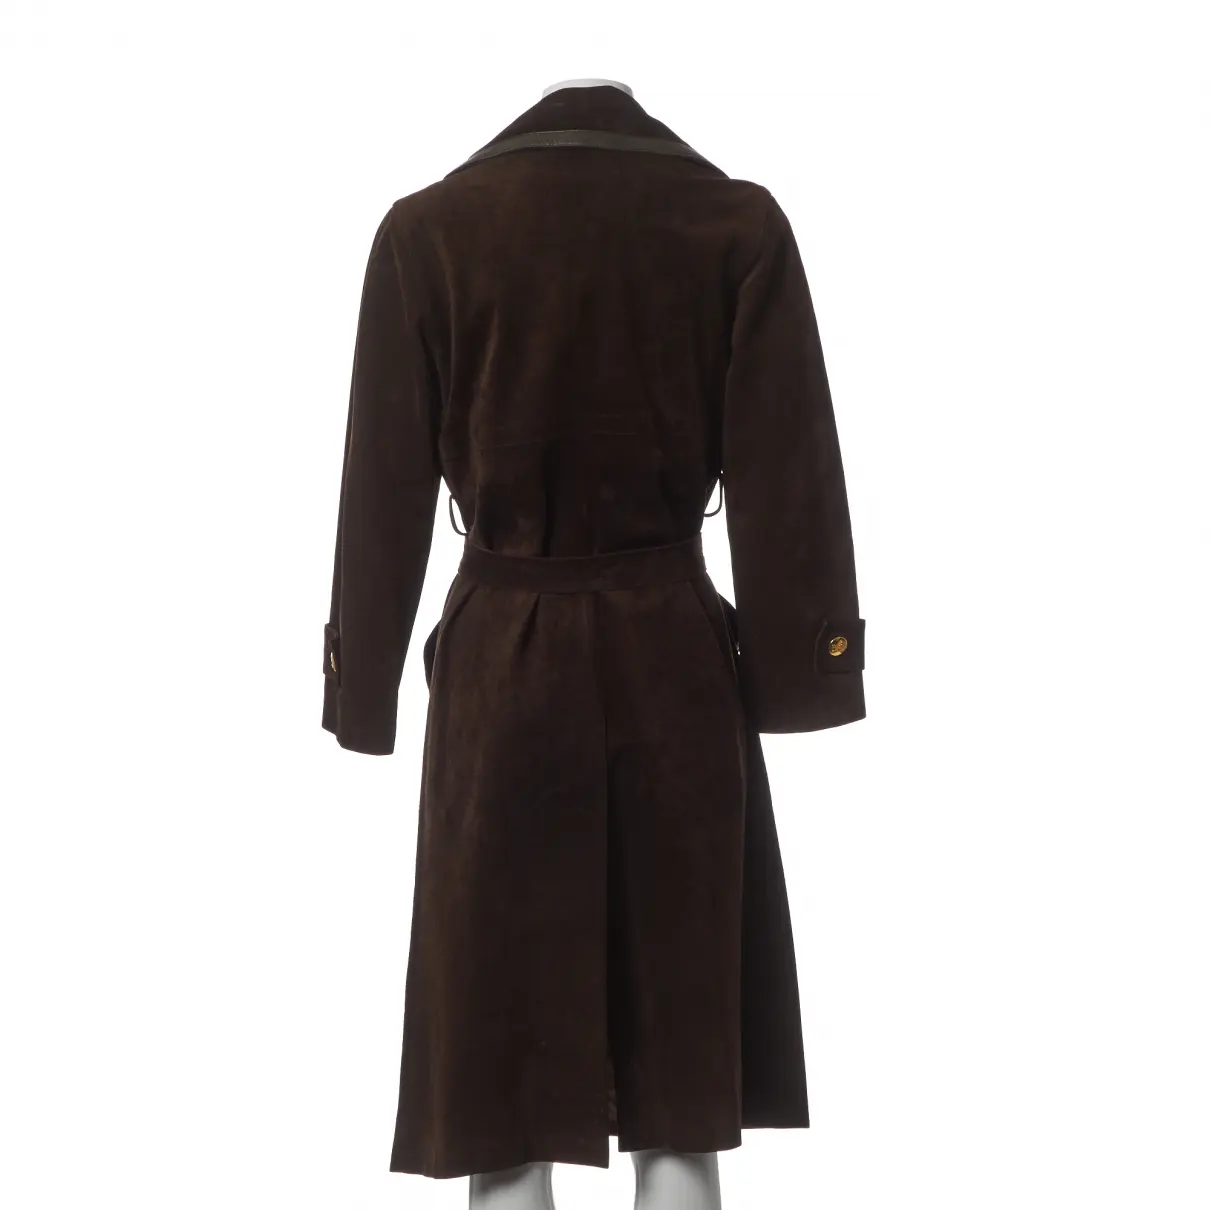 Buy Celine Coat online - Vintage